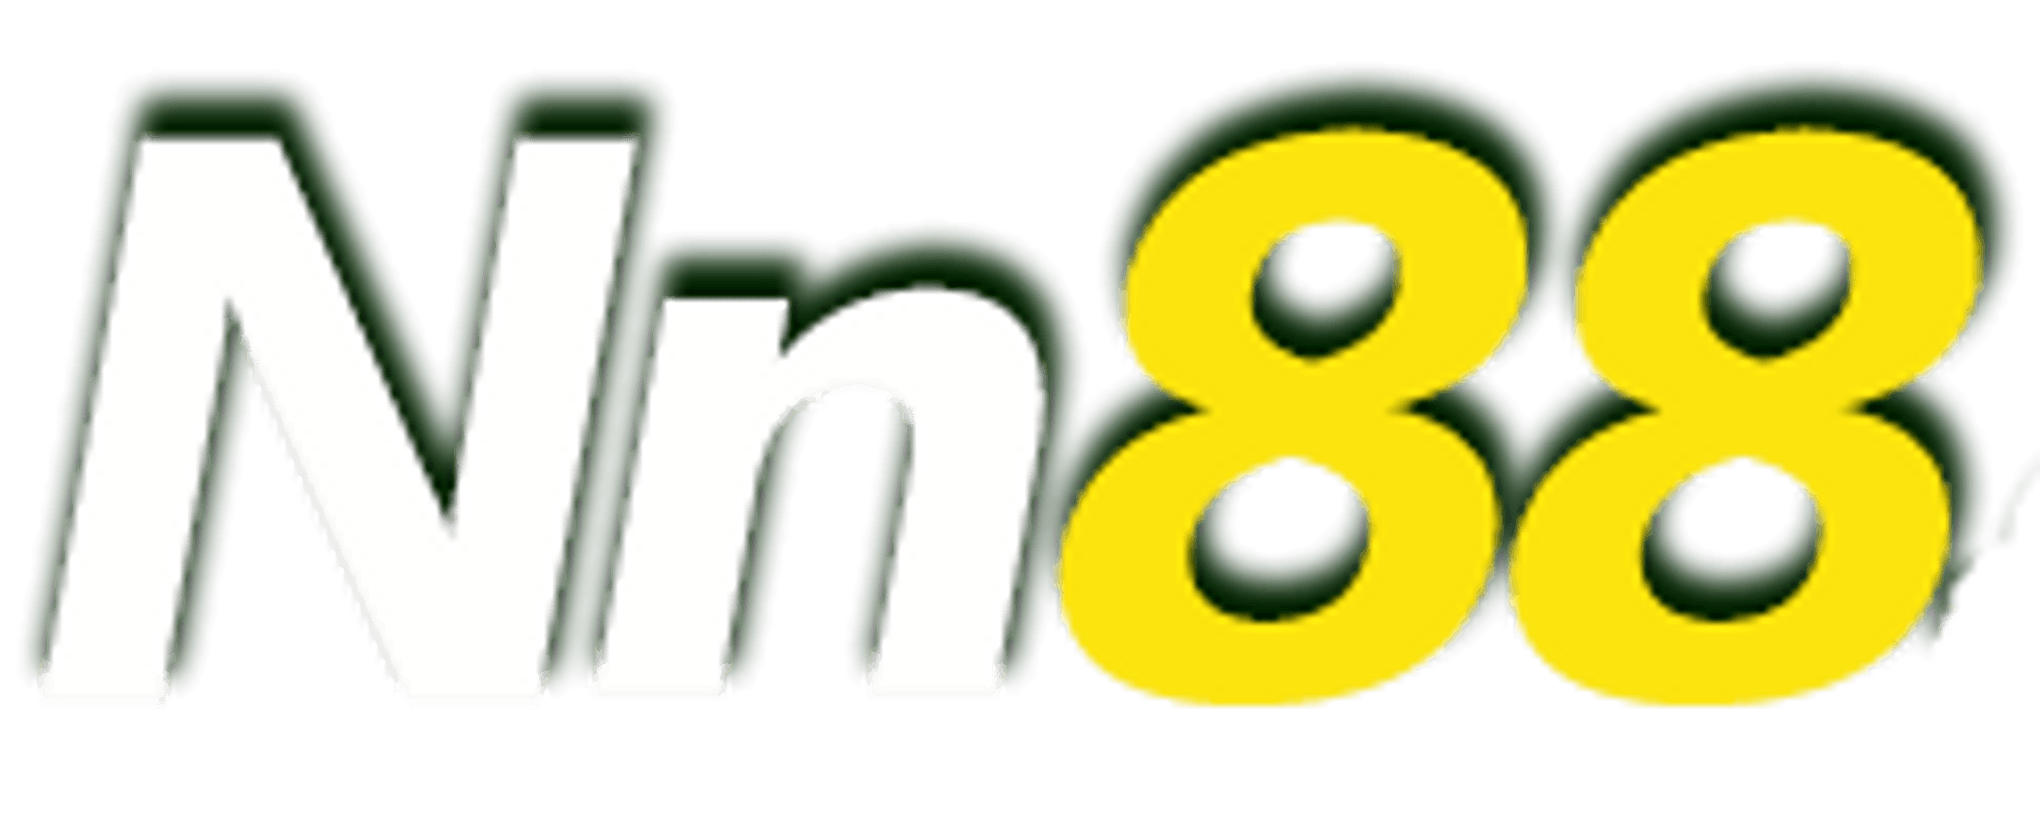 nn88 logo